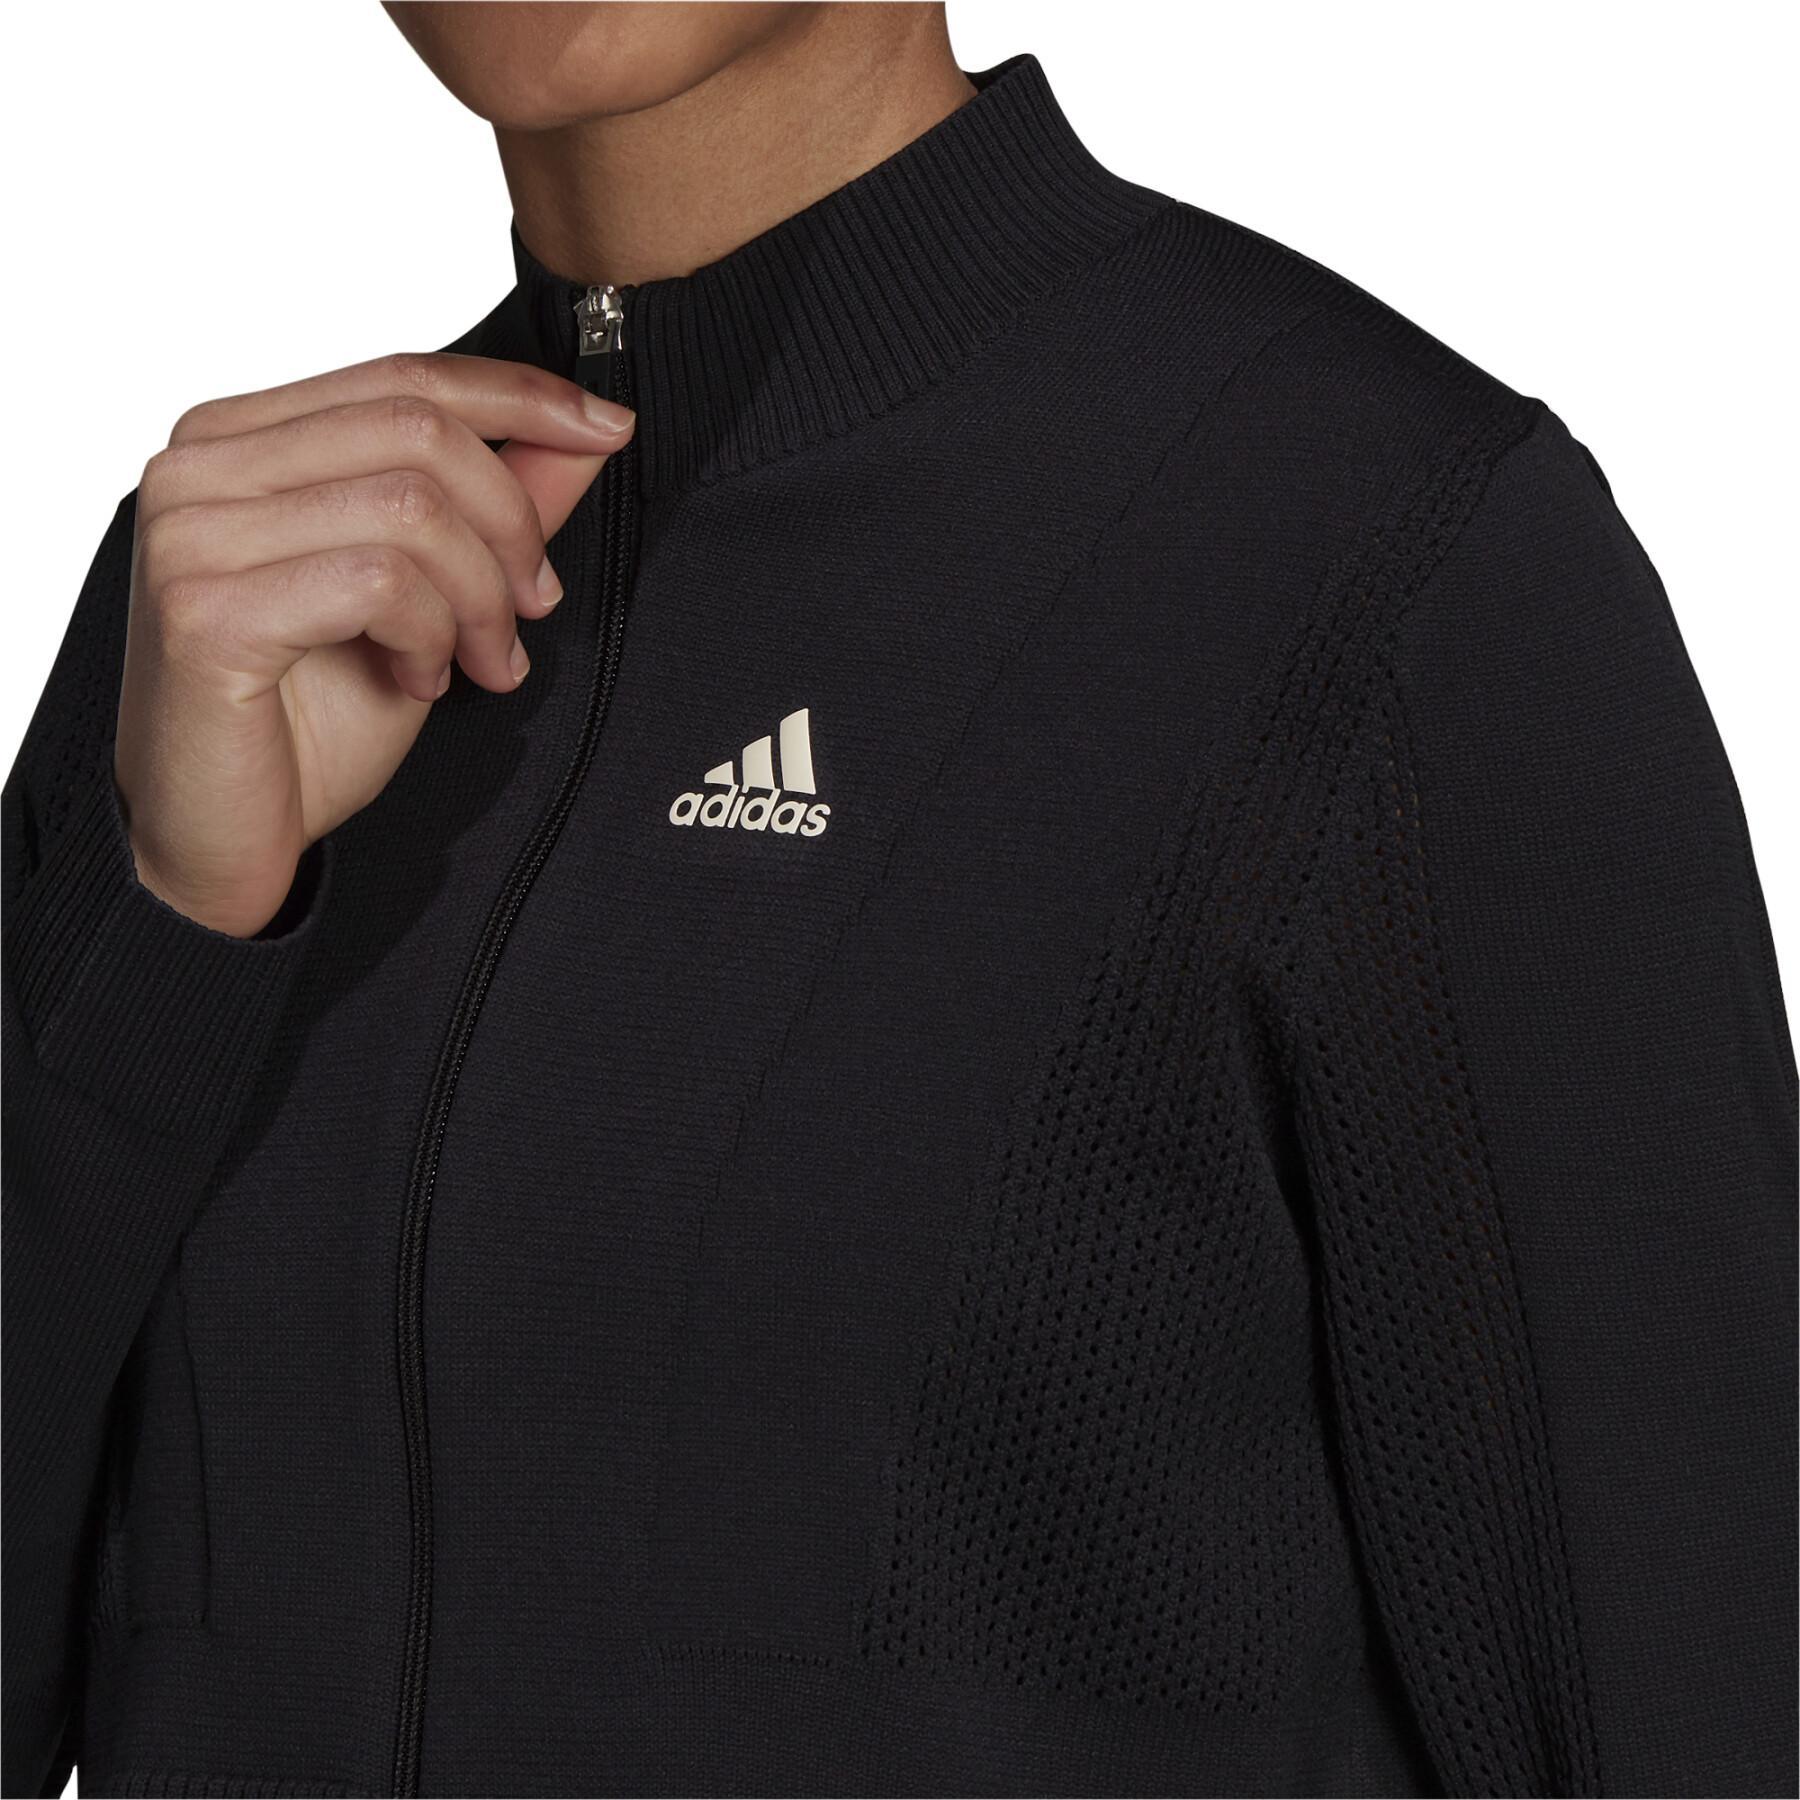 Women's jacket adidas Tennis Primeblue Primeknit